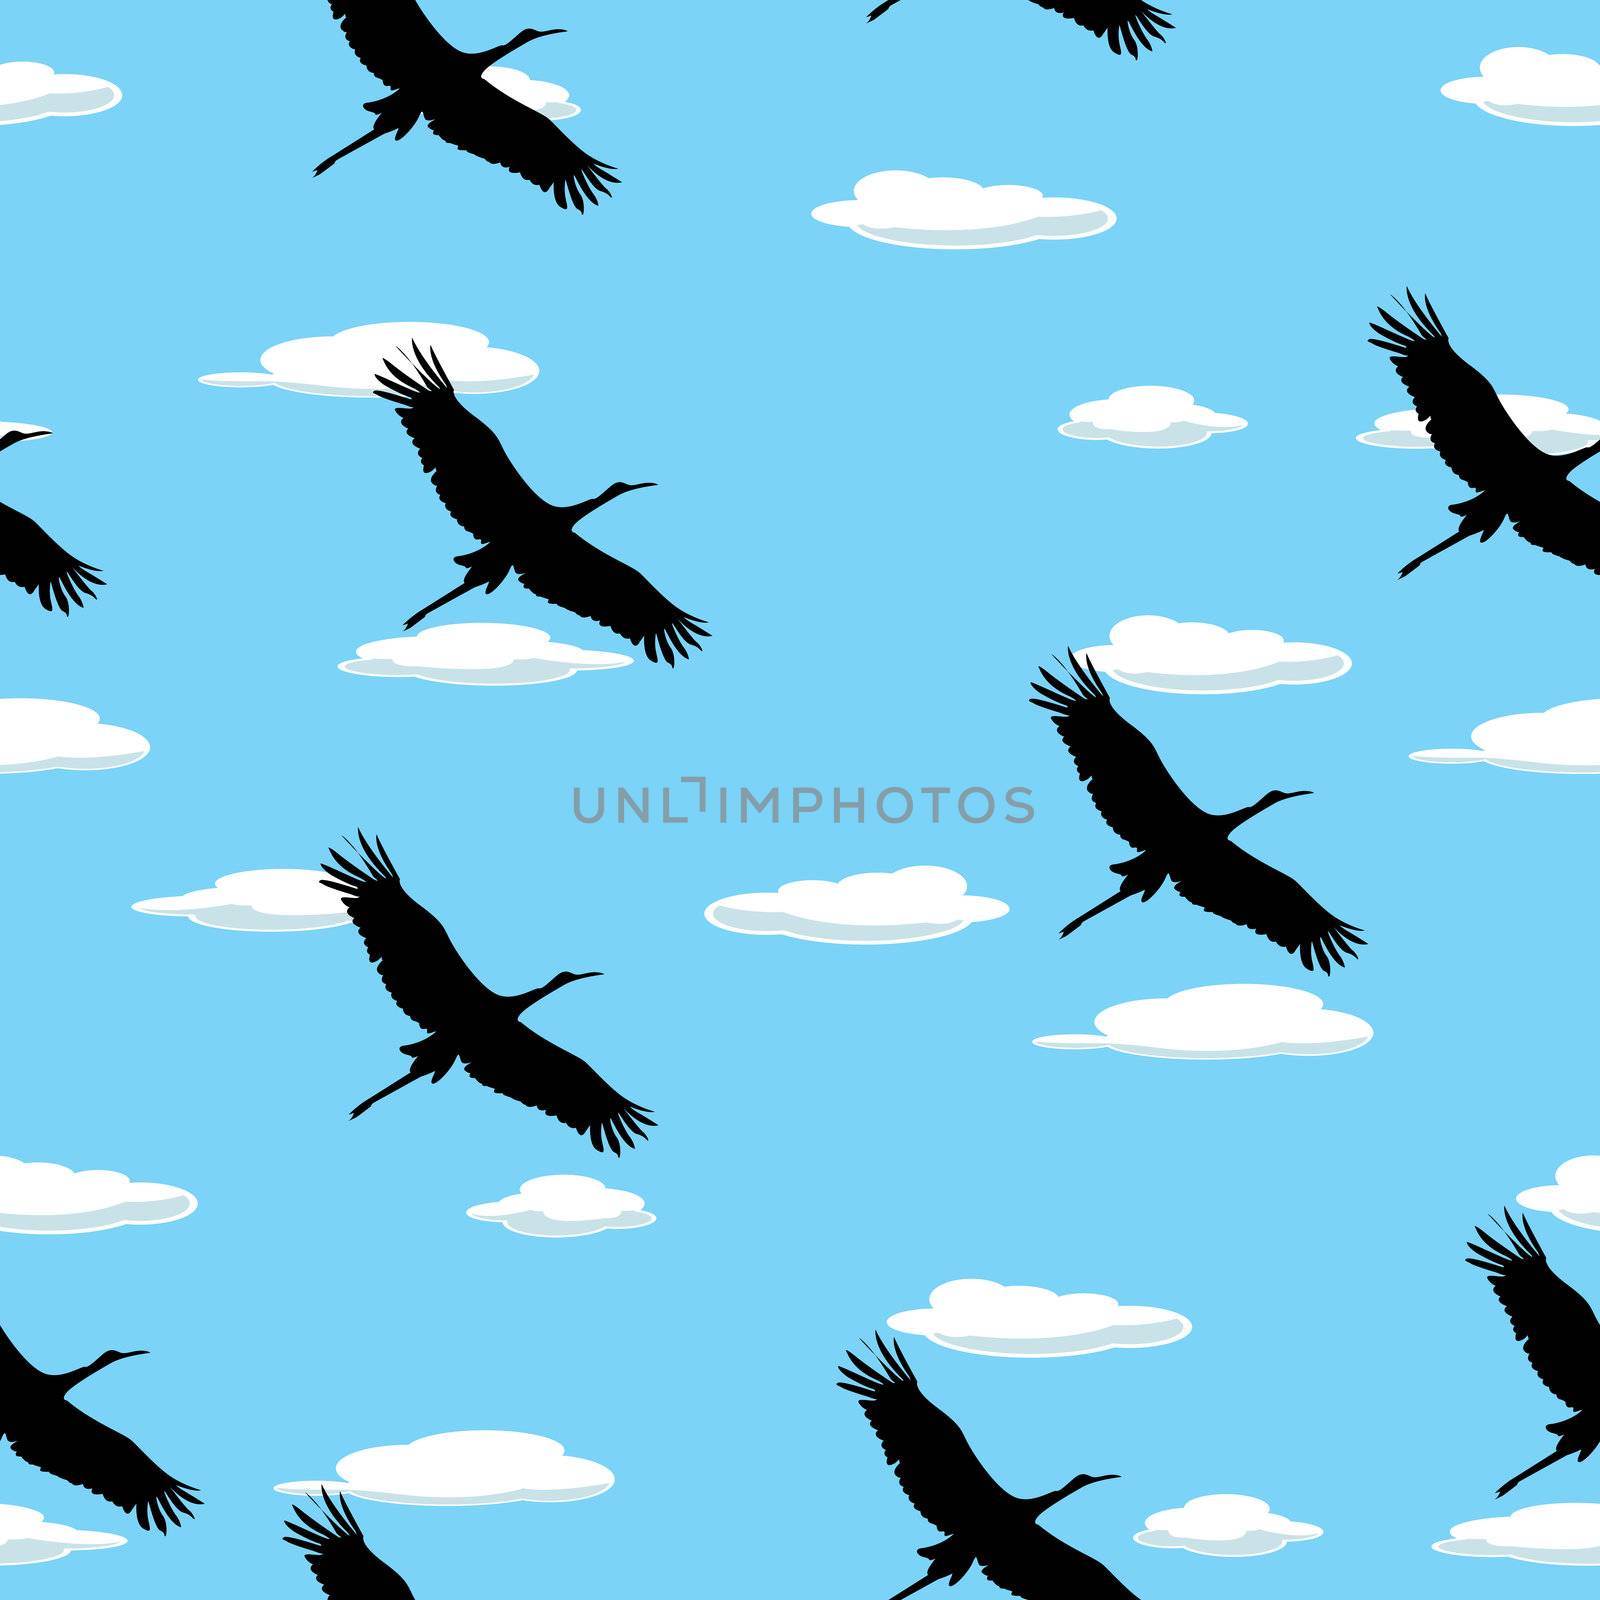 Flying birds pattern by Lirch